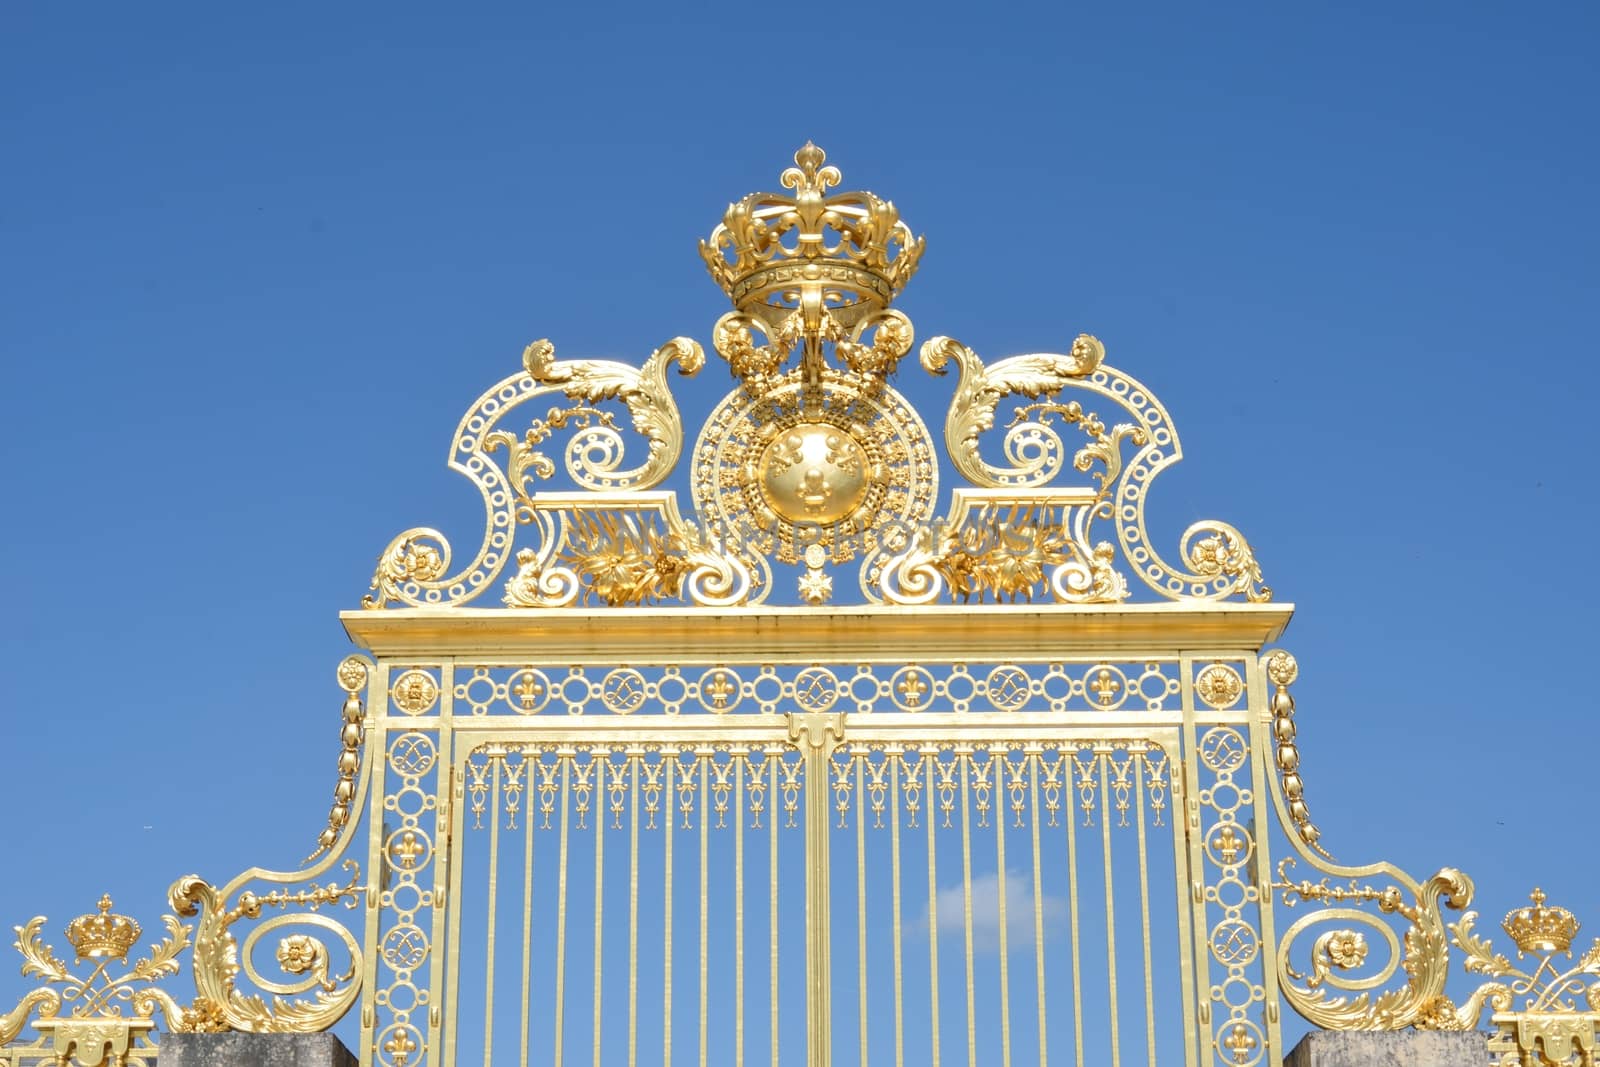 Golden Entrance Gates by pauws99